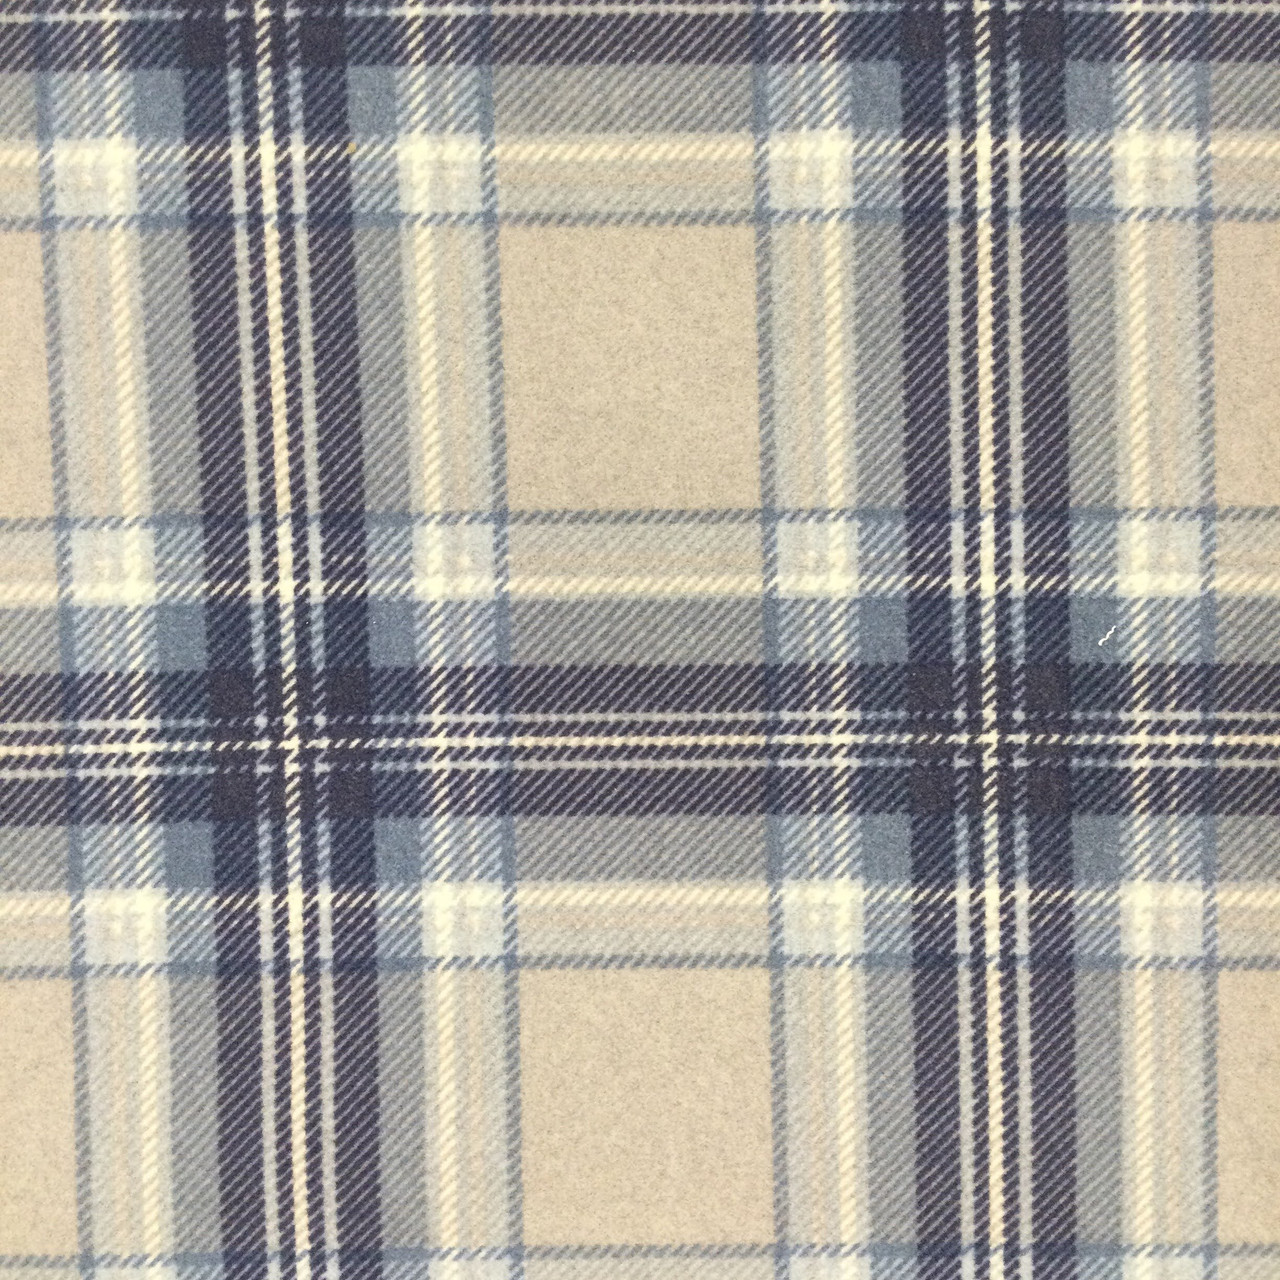 Tartan Plaid Velvet Fabric | Blue and Grey | Heavyweight Upholstery |  Microfiber Velvet | 54 wide | By The Yard